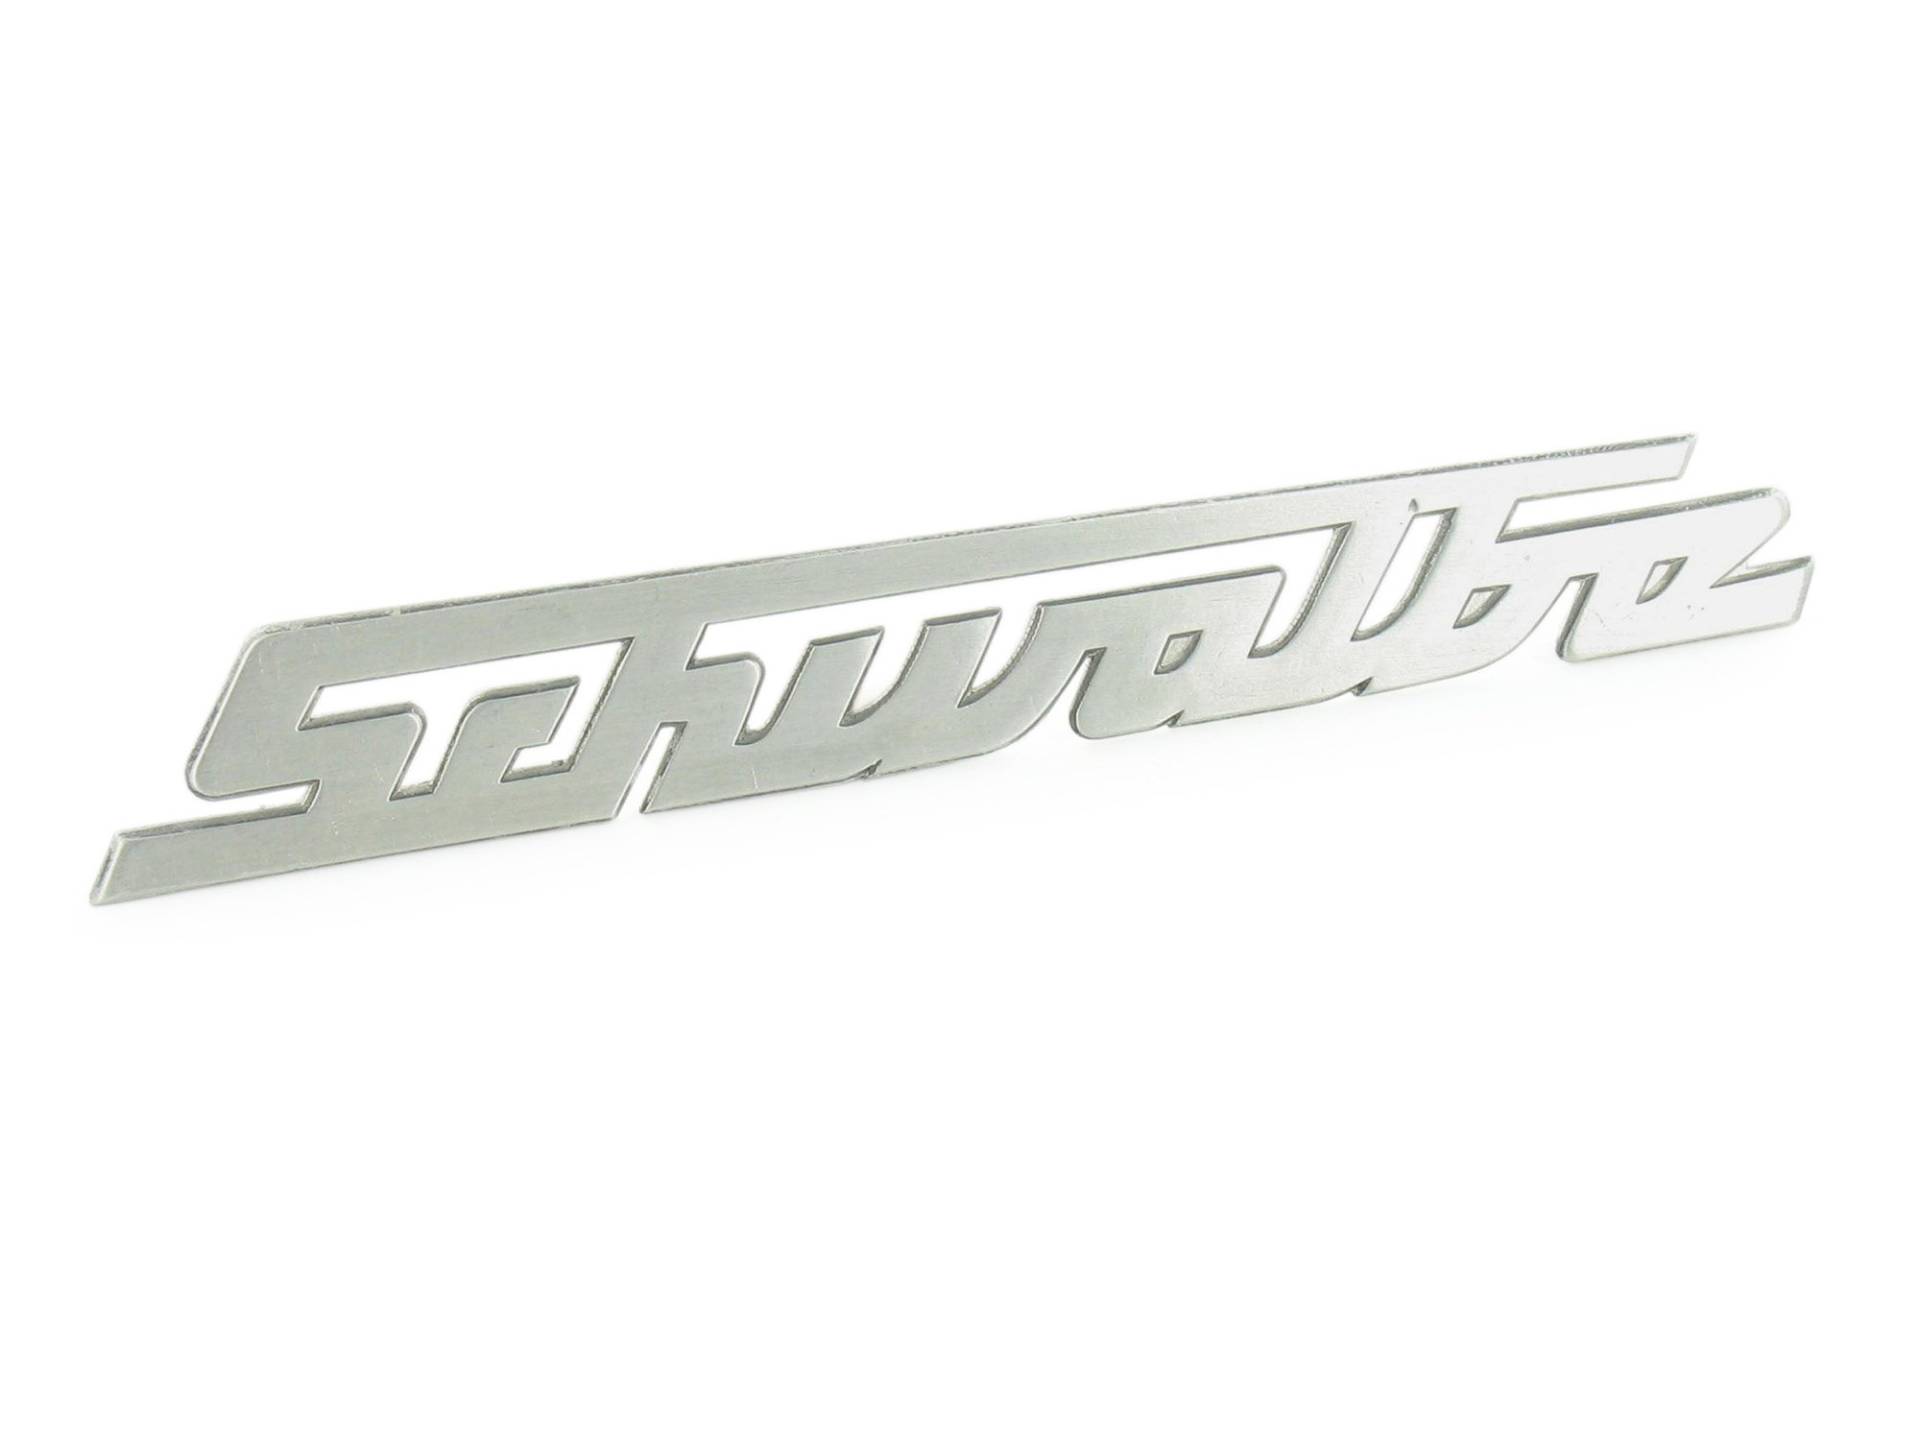 Schriftzug - Schwalbe - Aluminium, silber, gerade (nicht gebogen) fÃ¼r Knieschutzblech (Beinblech) - KR51 von MZA Meyer-Zweiradtechnik GmbH